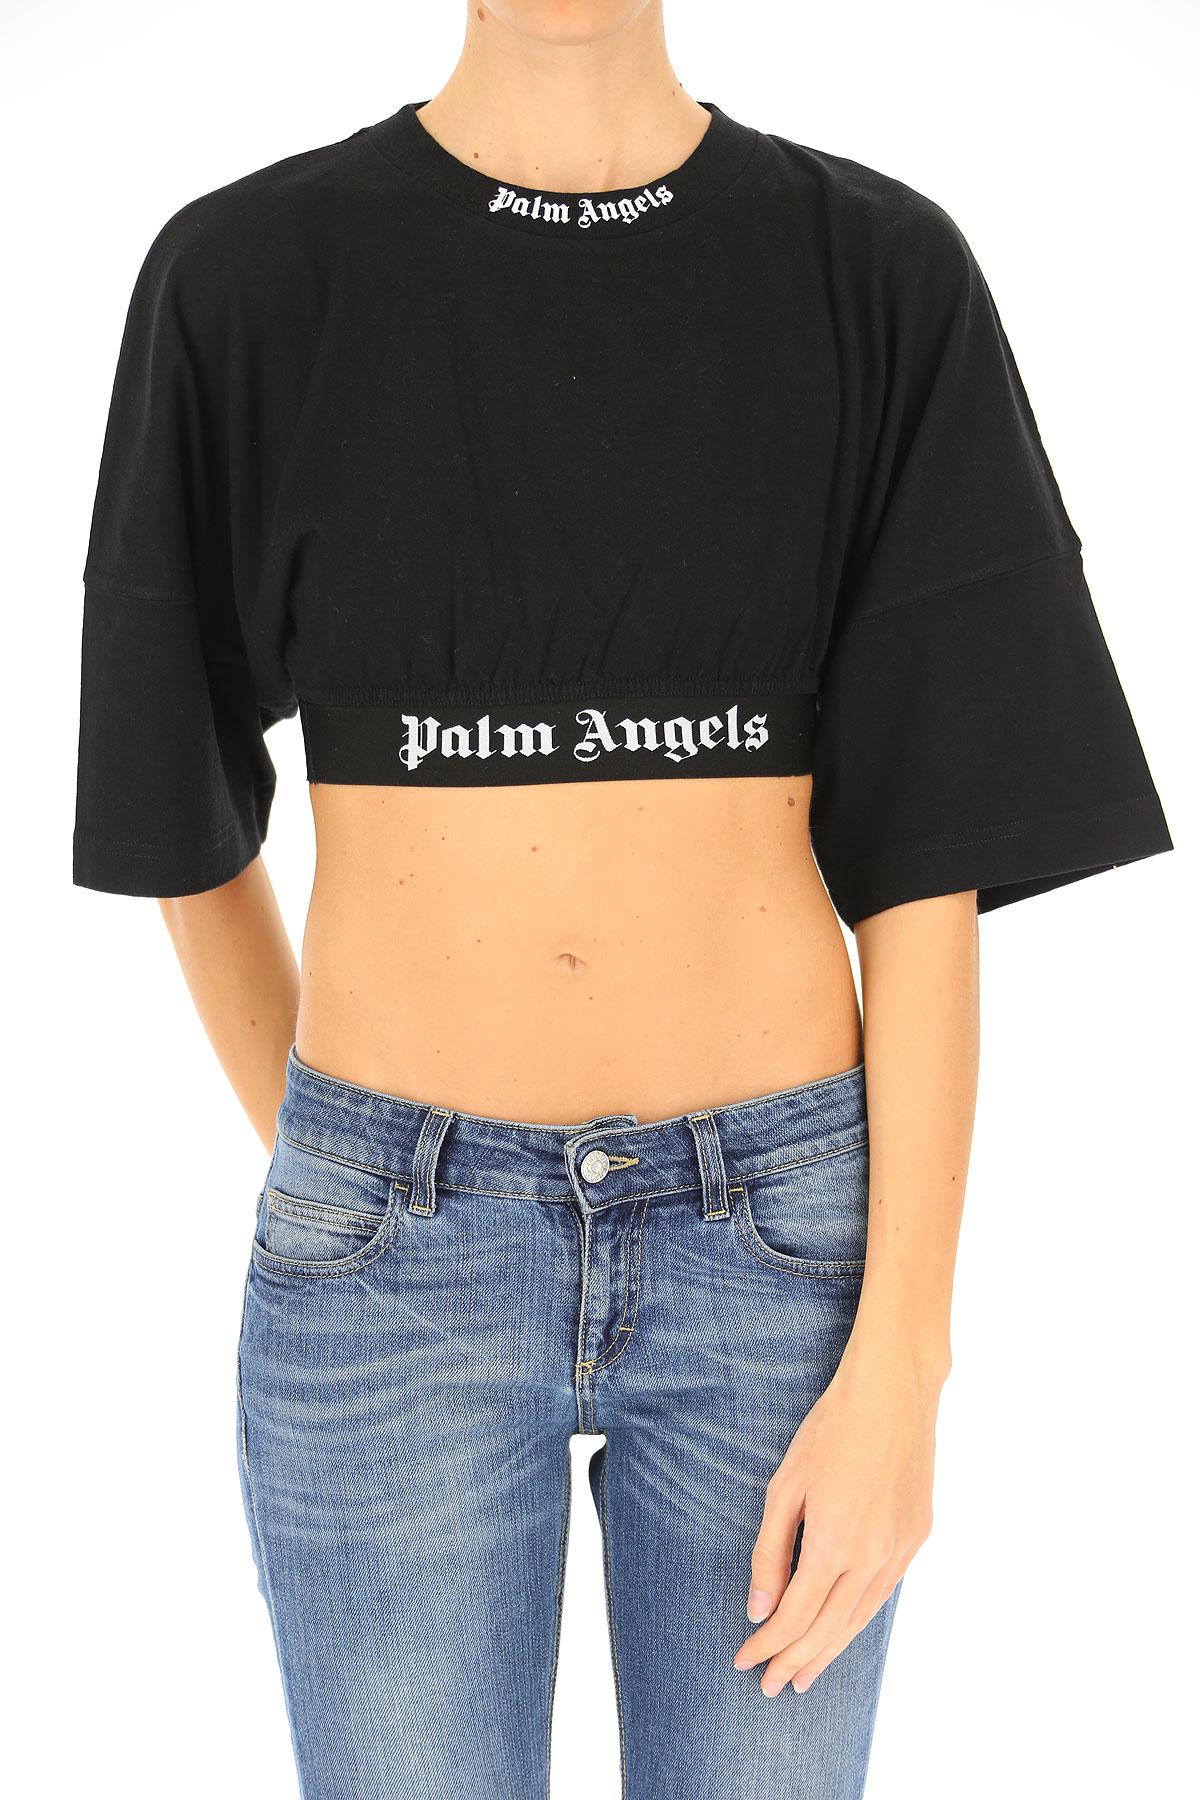 palm angels women tshirt